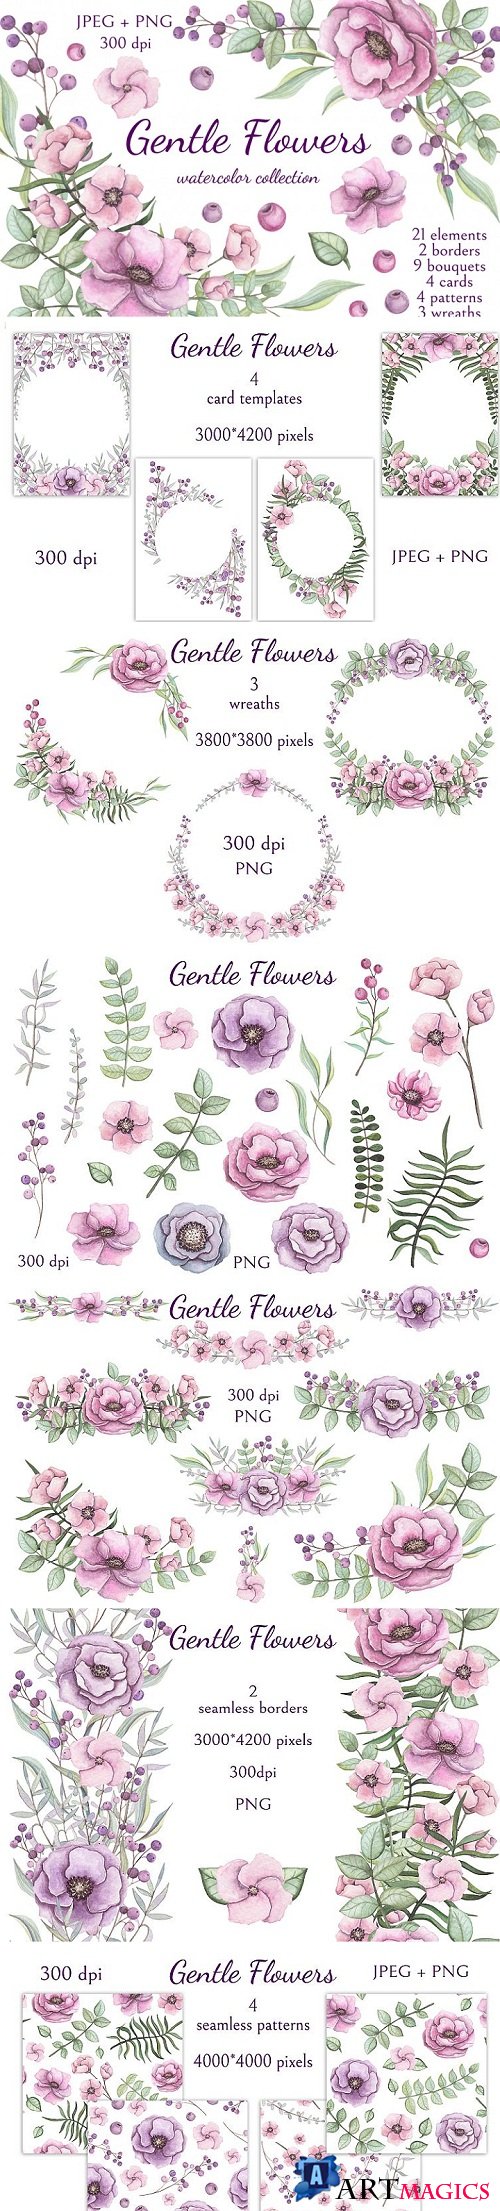 Designbundles - Gentle Flowers - 76025